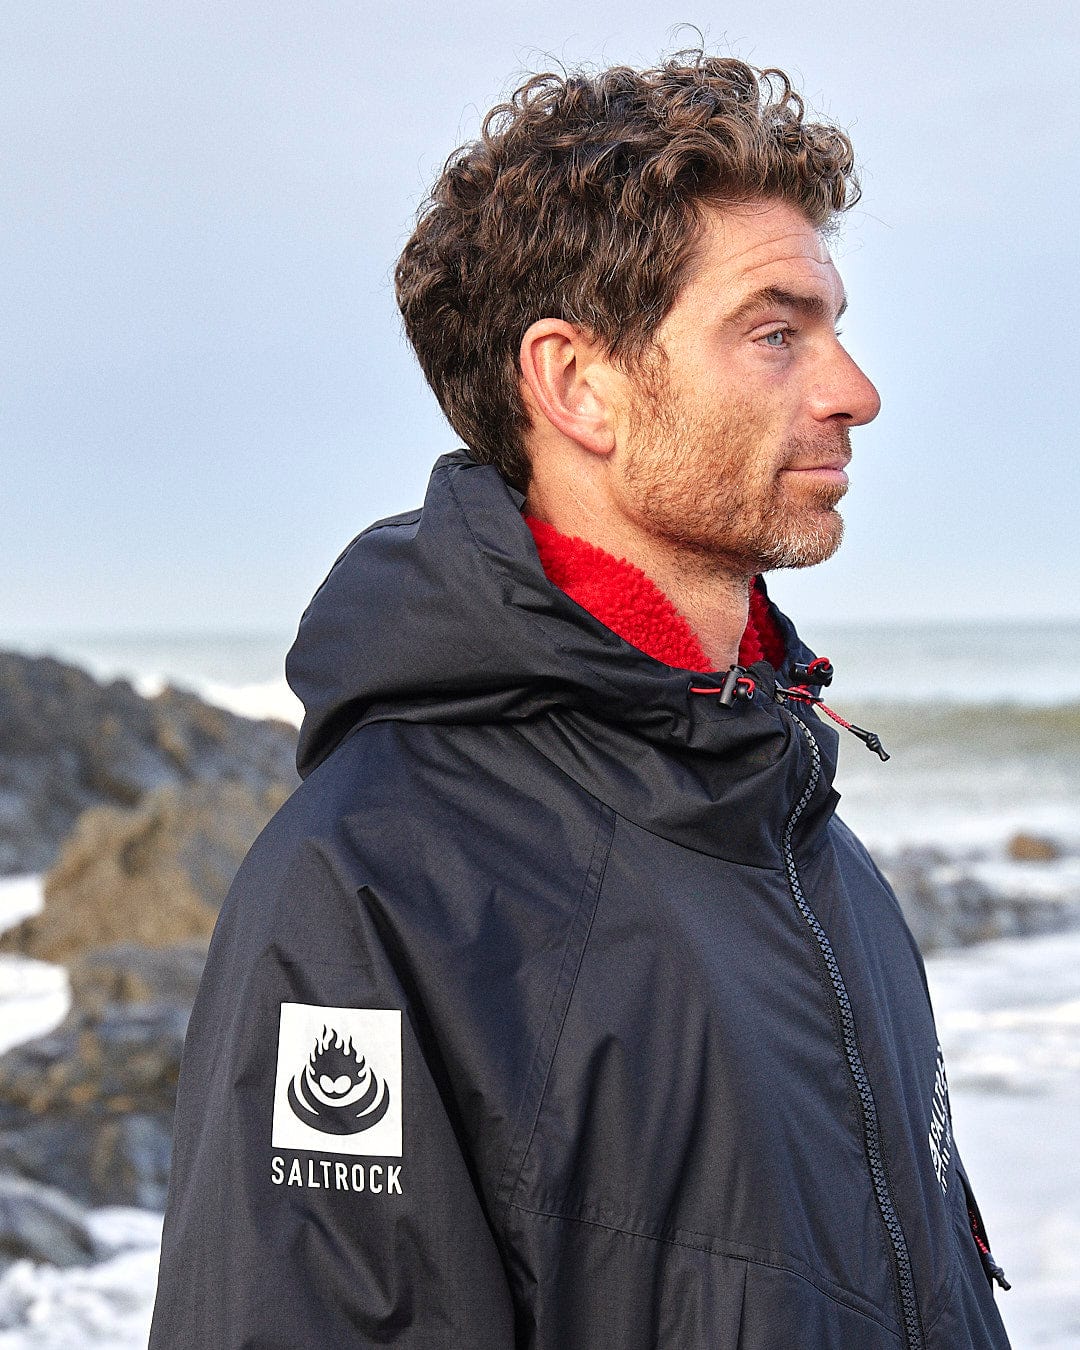 A man in a Saltrock black jacket standing on a beach.